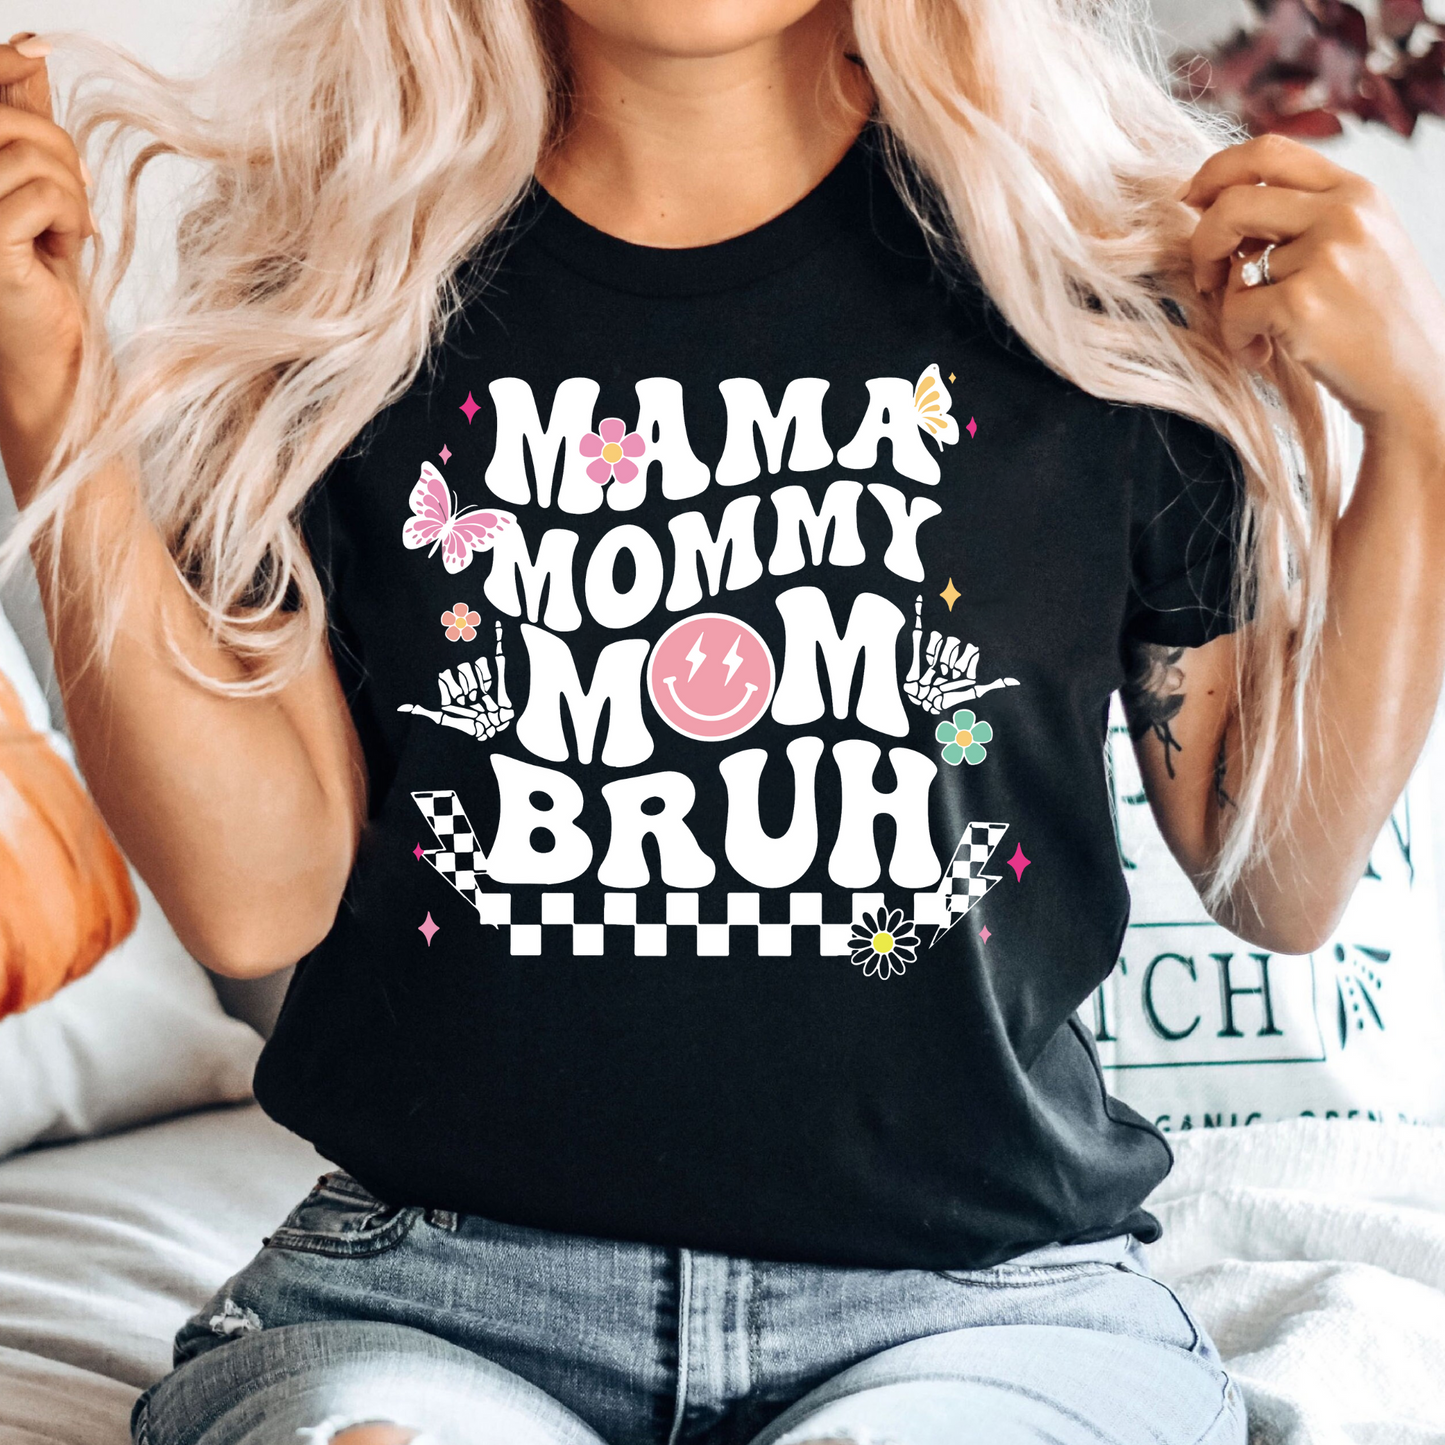 MAMA mommy mom BRUH Shirt, Bruh Shirt, Mom Bruh Tee, Funny Mom Tee